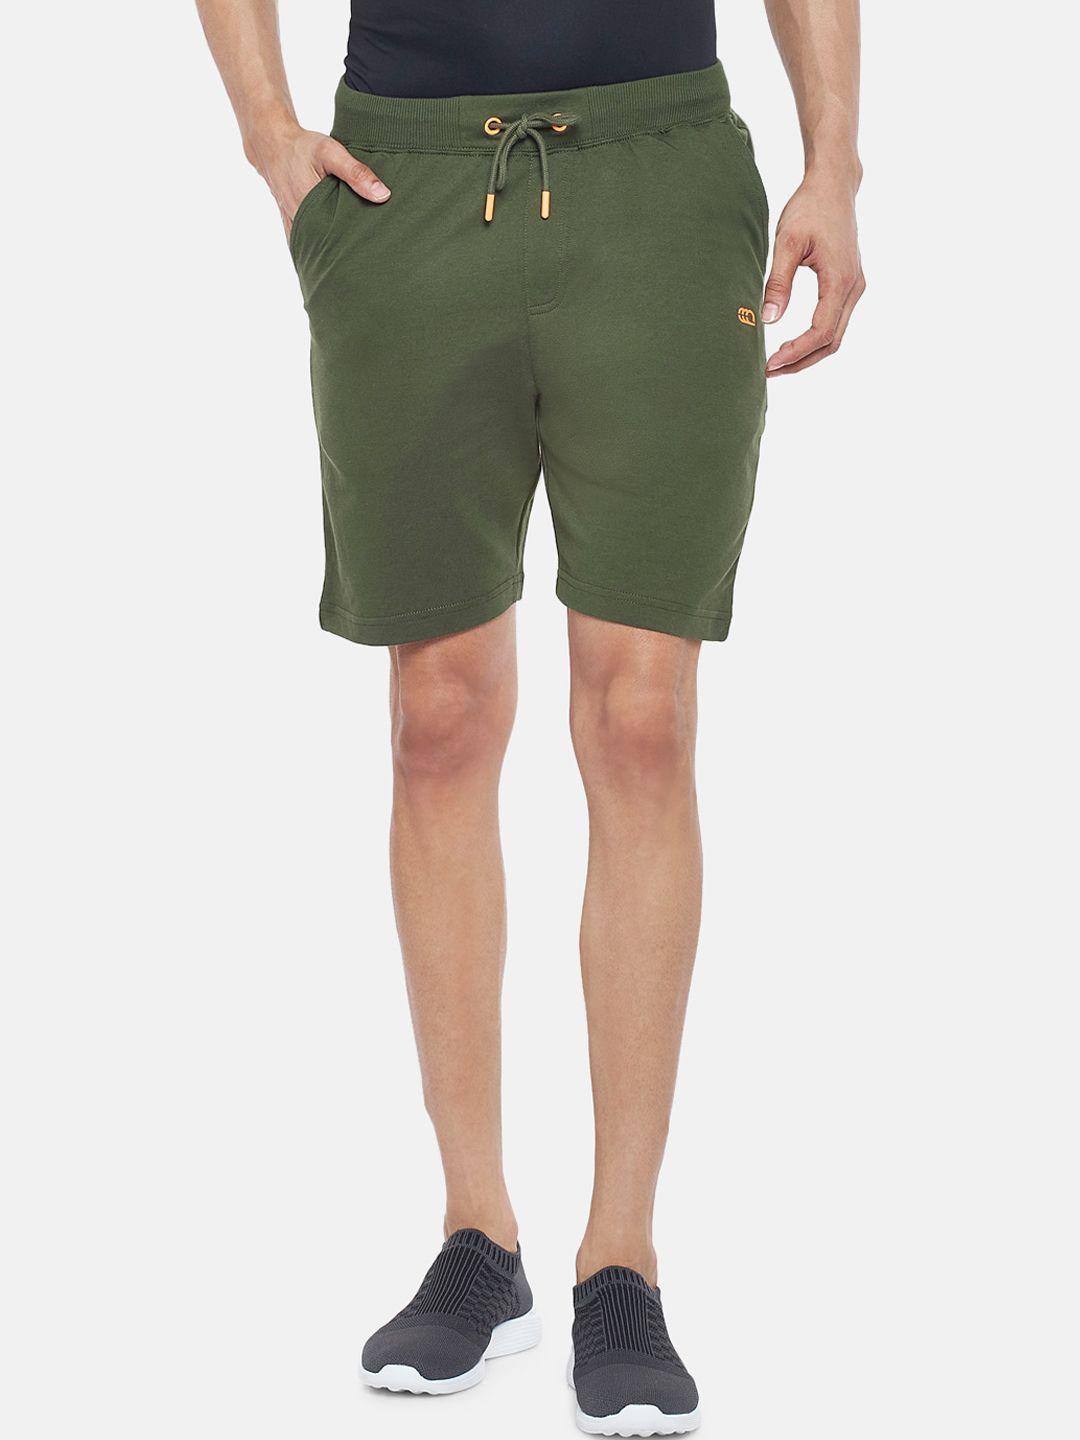 ajile-by-pantaloons-men-olive-green-slim-fit-regular-shorts